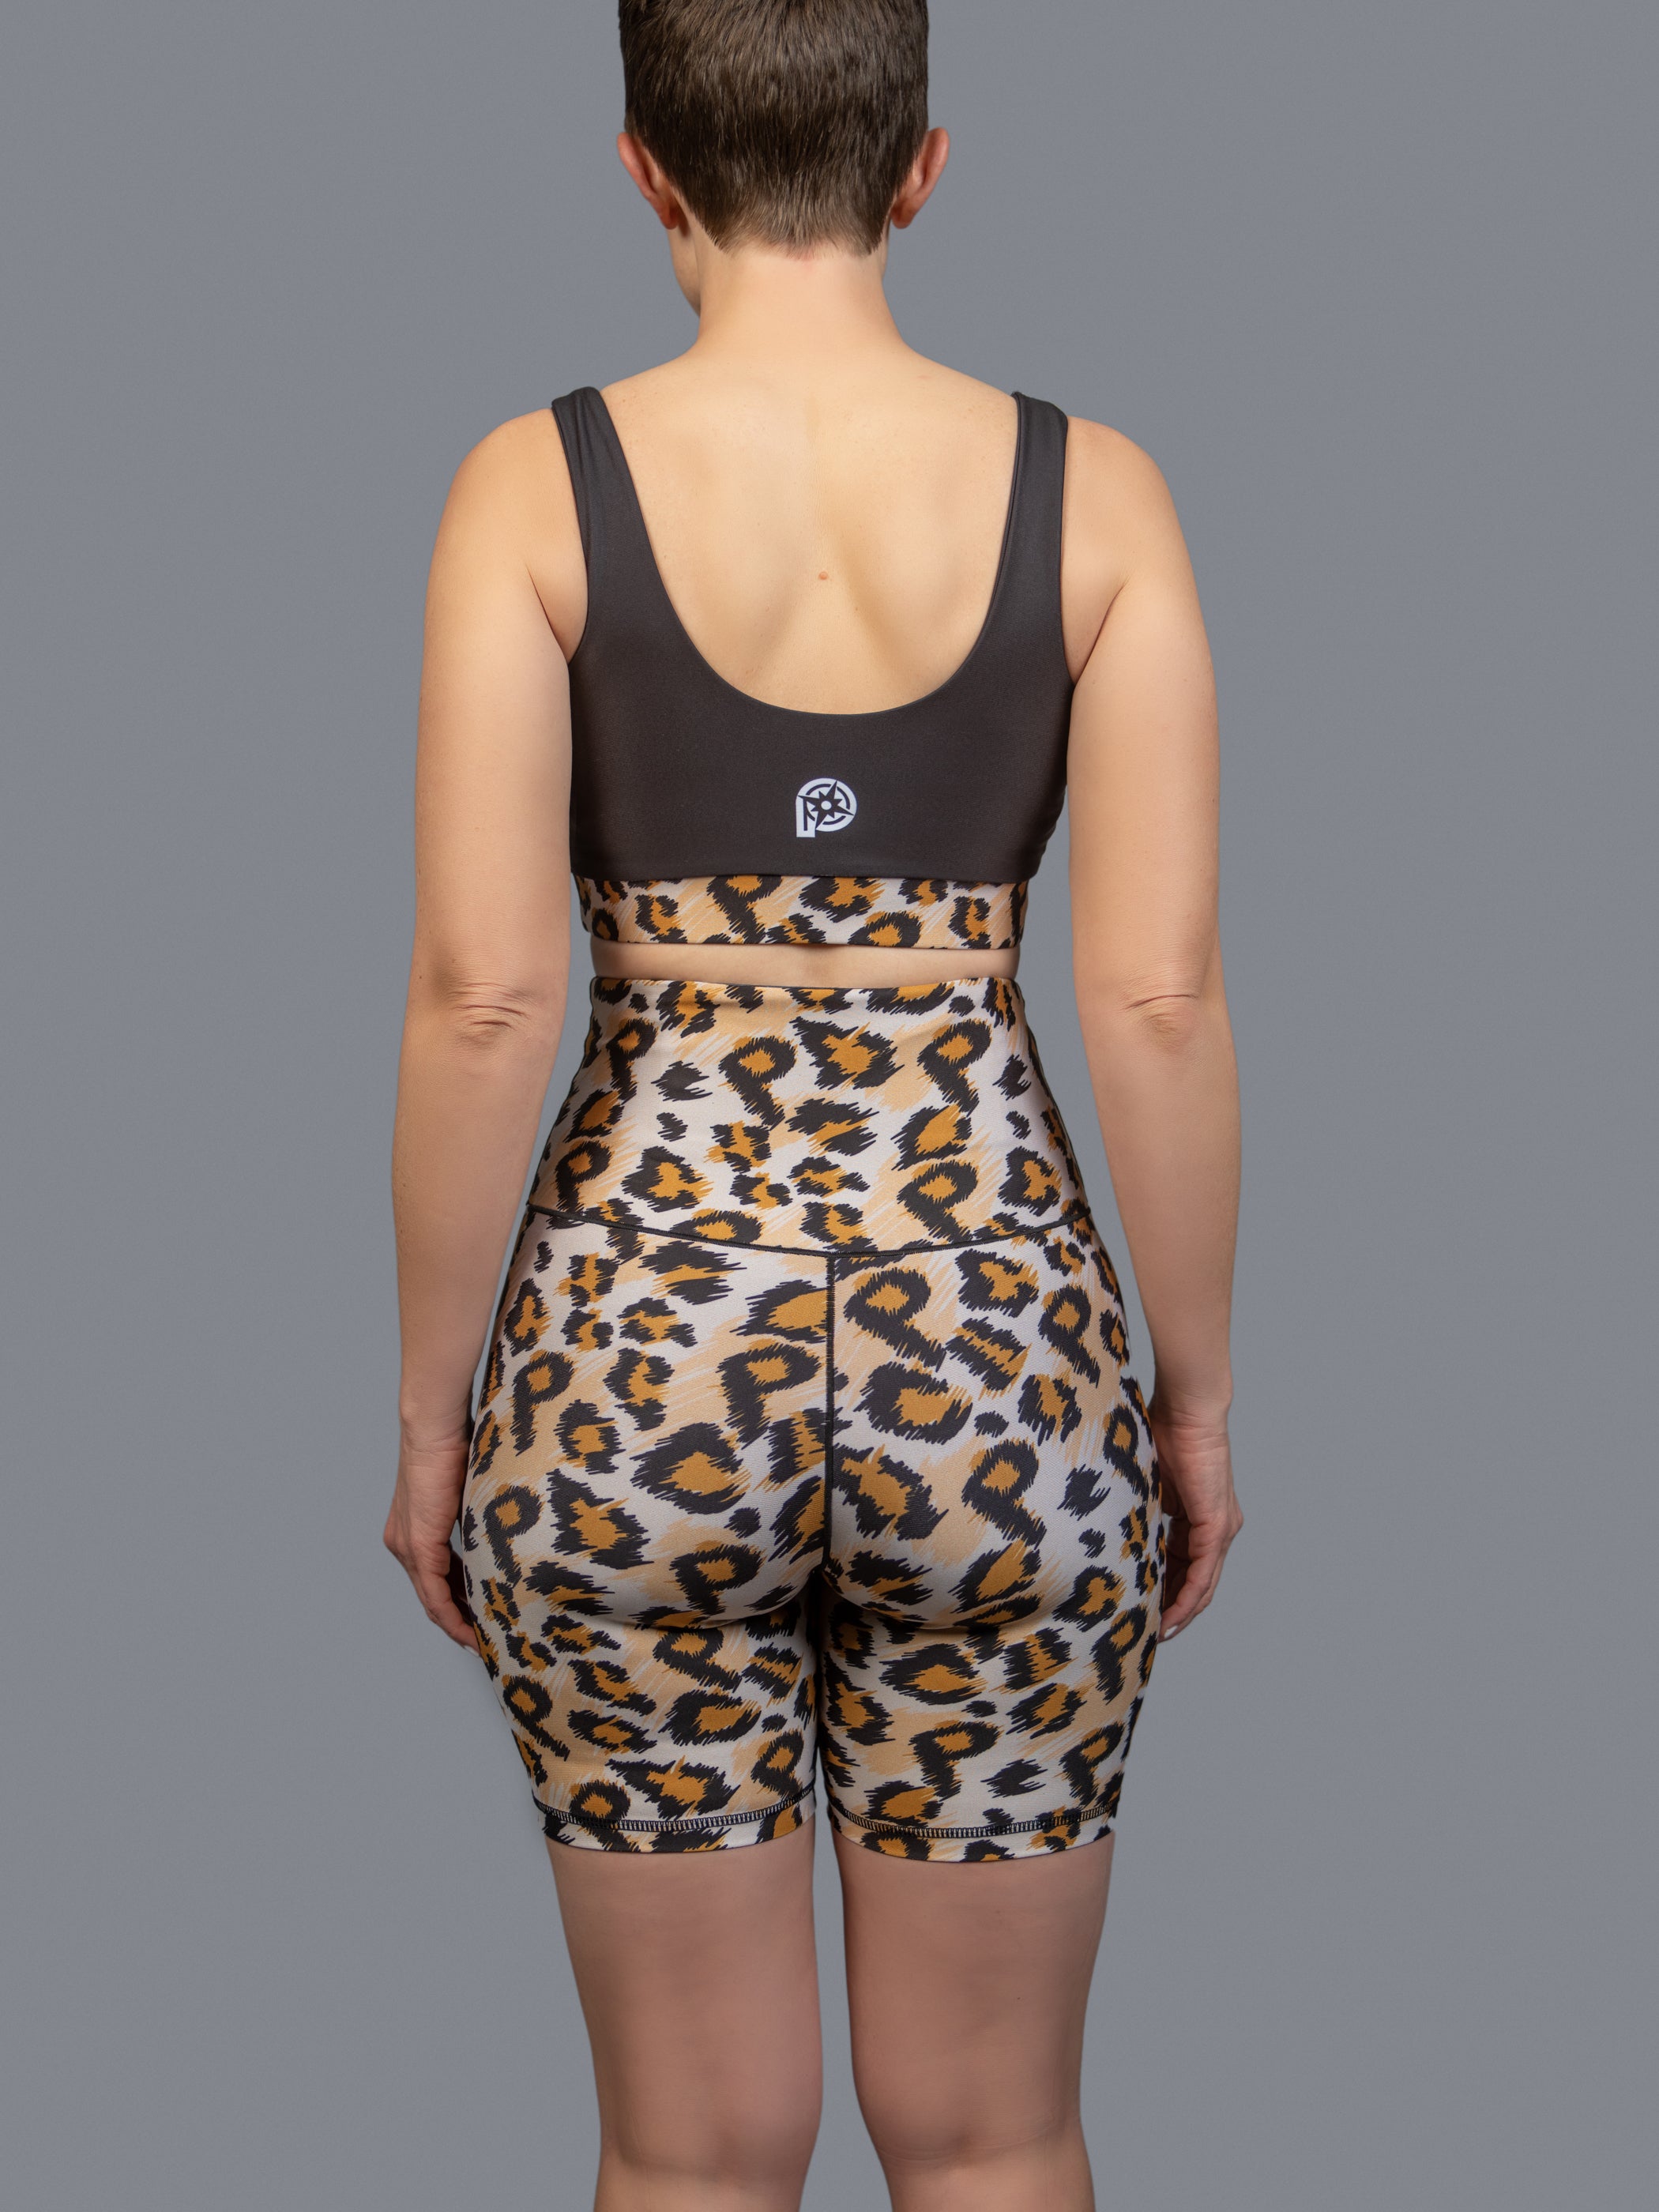 Phit Leopard Compression Shorts 7"